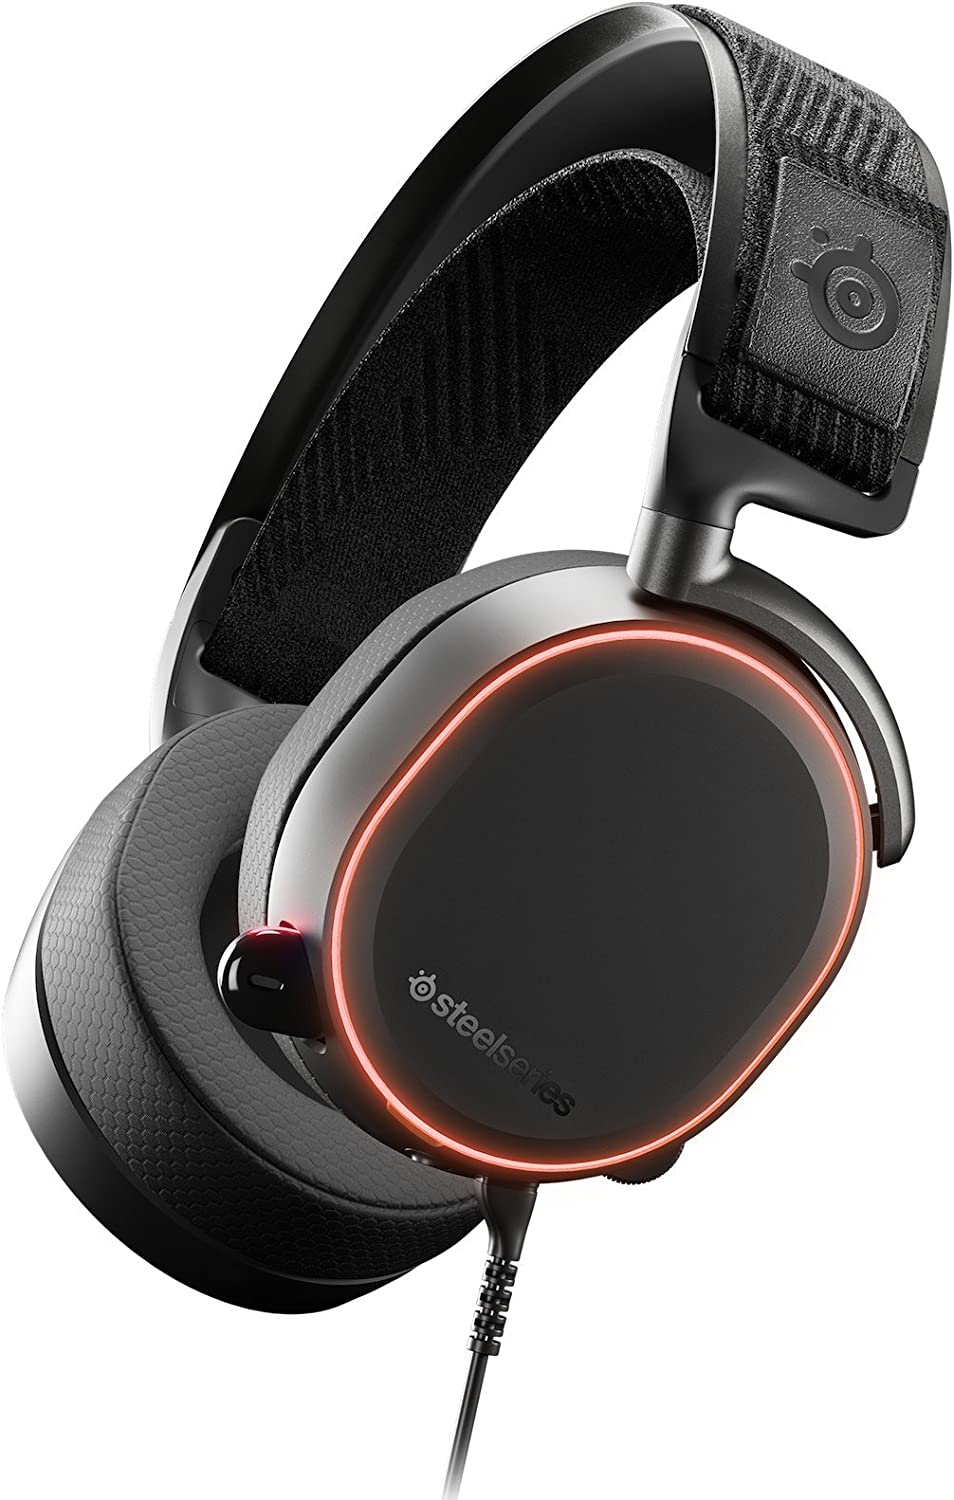 (B1) SteelSeries Arctis Pro Gaming-Headset DTS Headphone:X v2.0 Surround